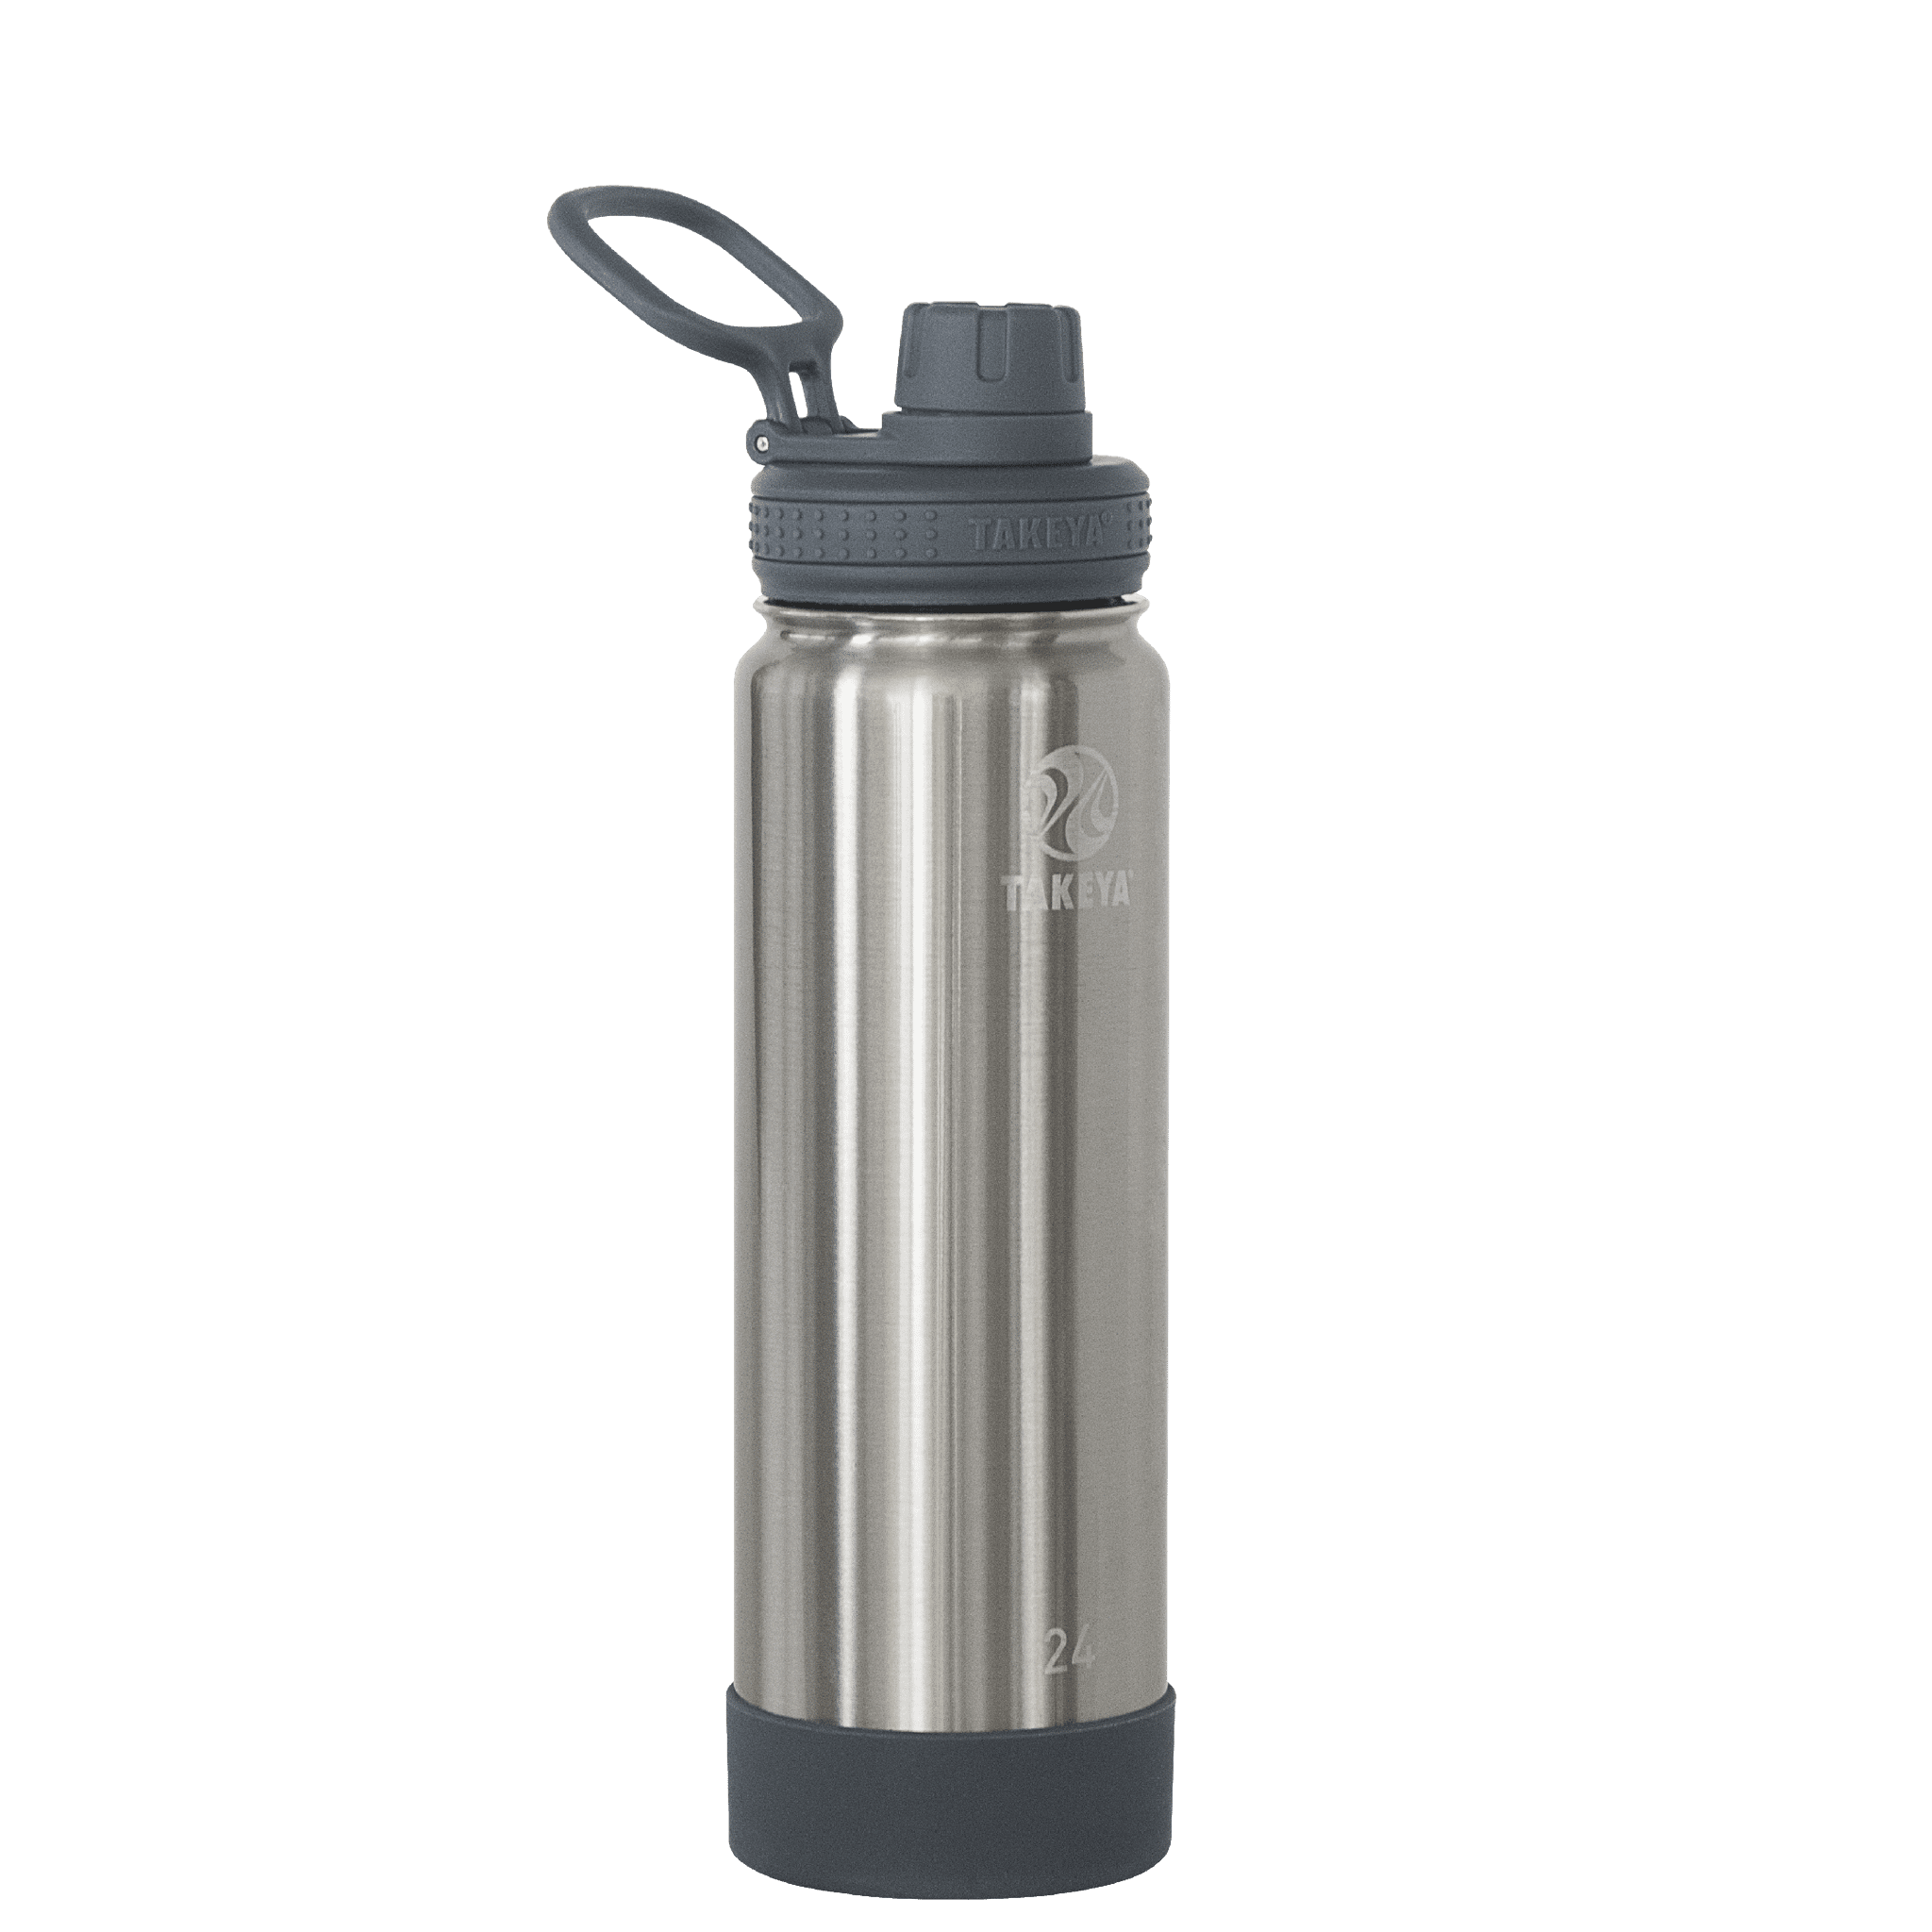 Stainless Steel Takeya Water Bottle